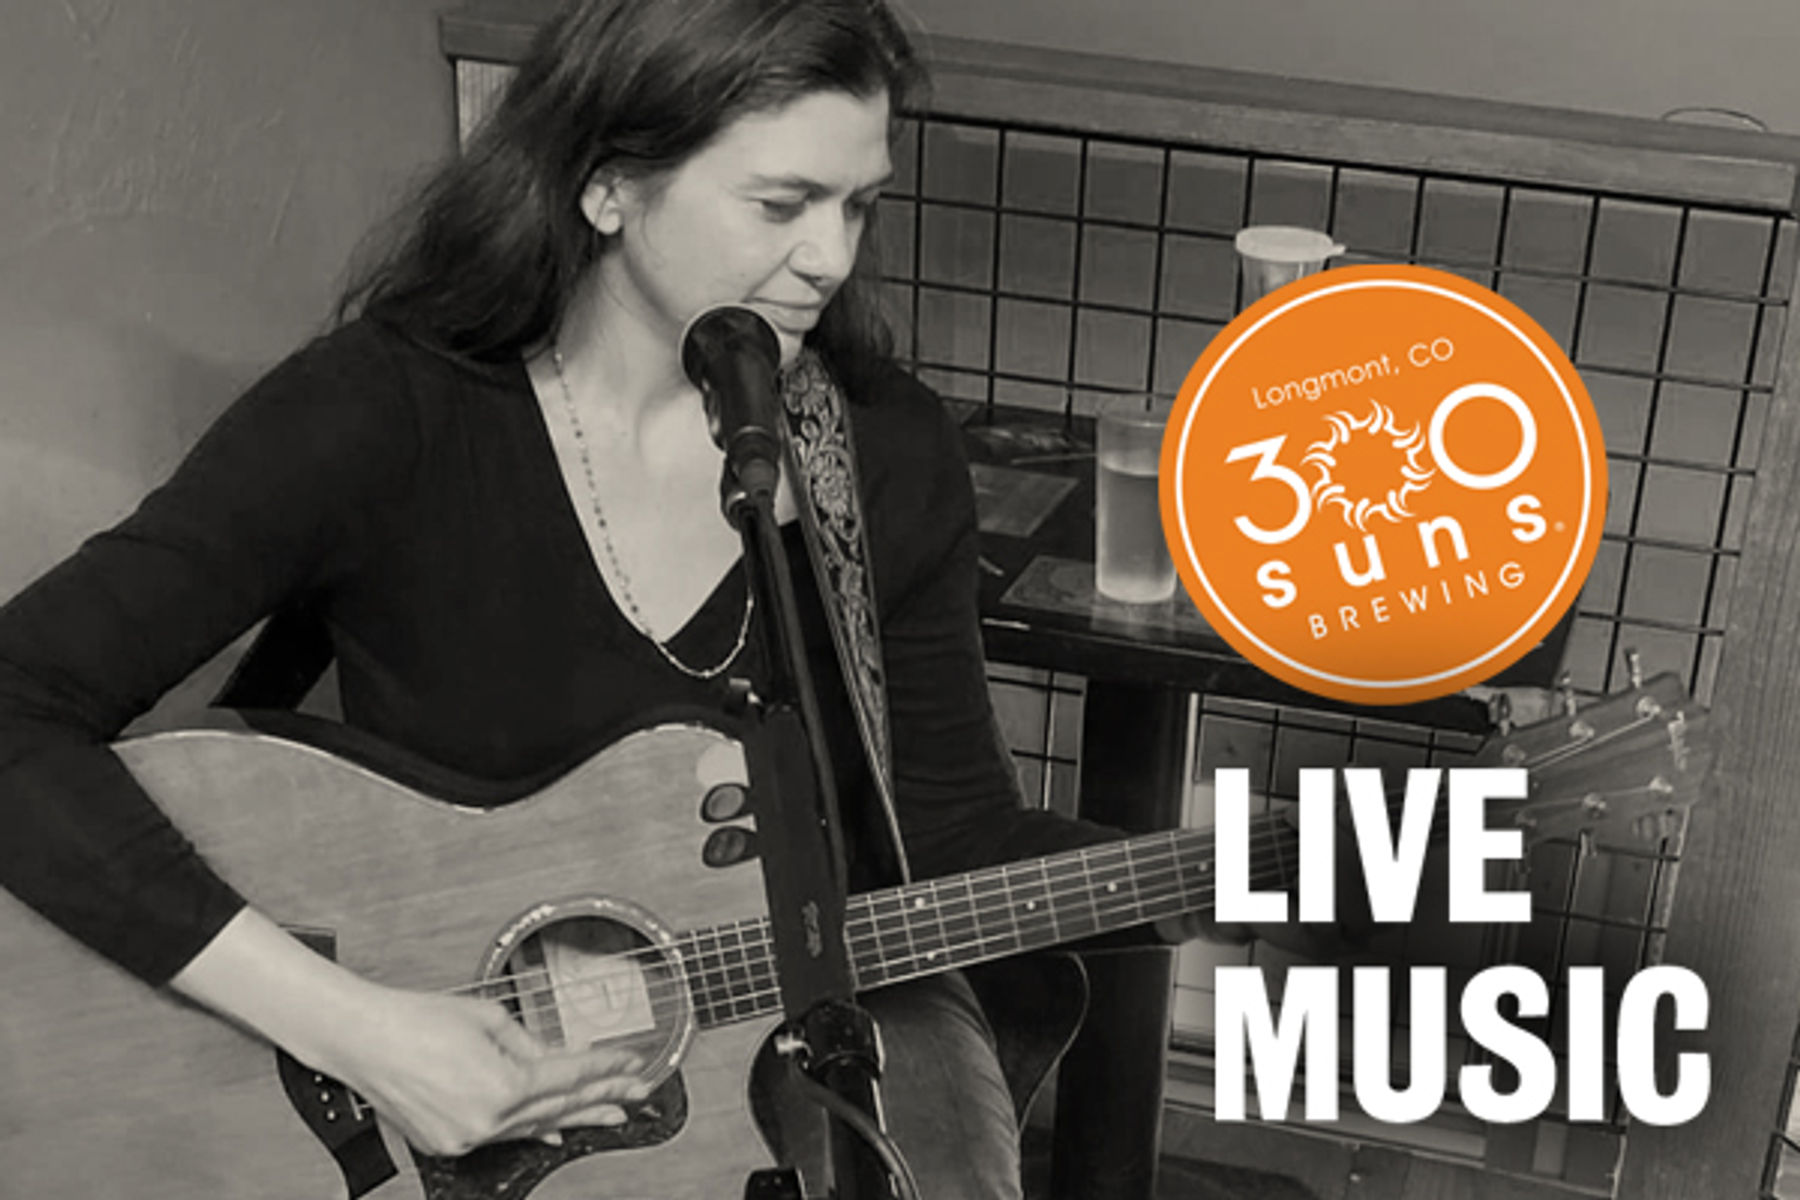 Valerie Bhat - Live Music at 300 Suns